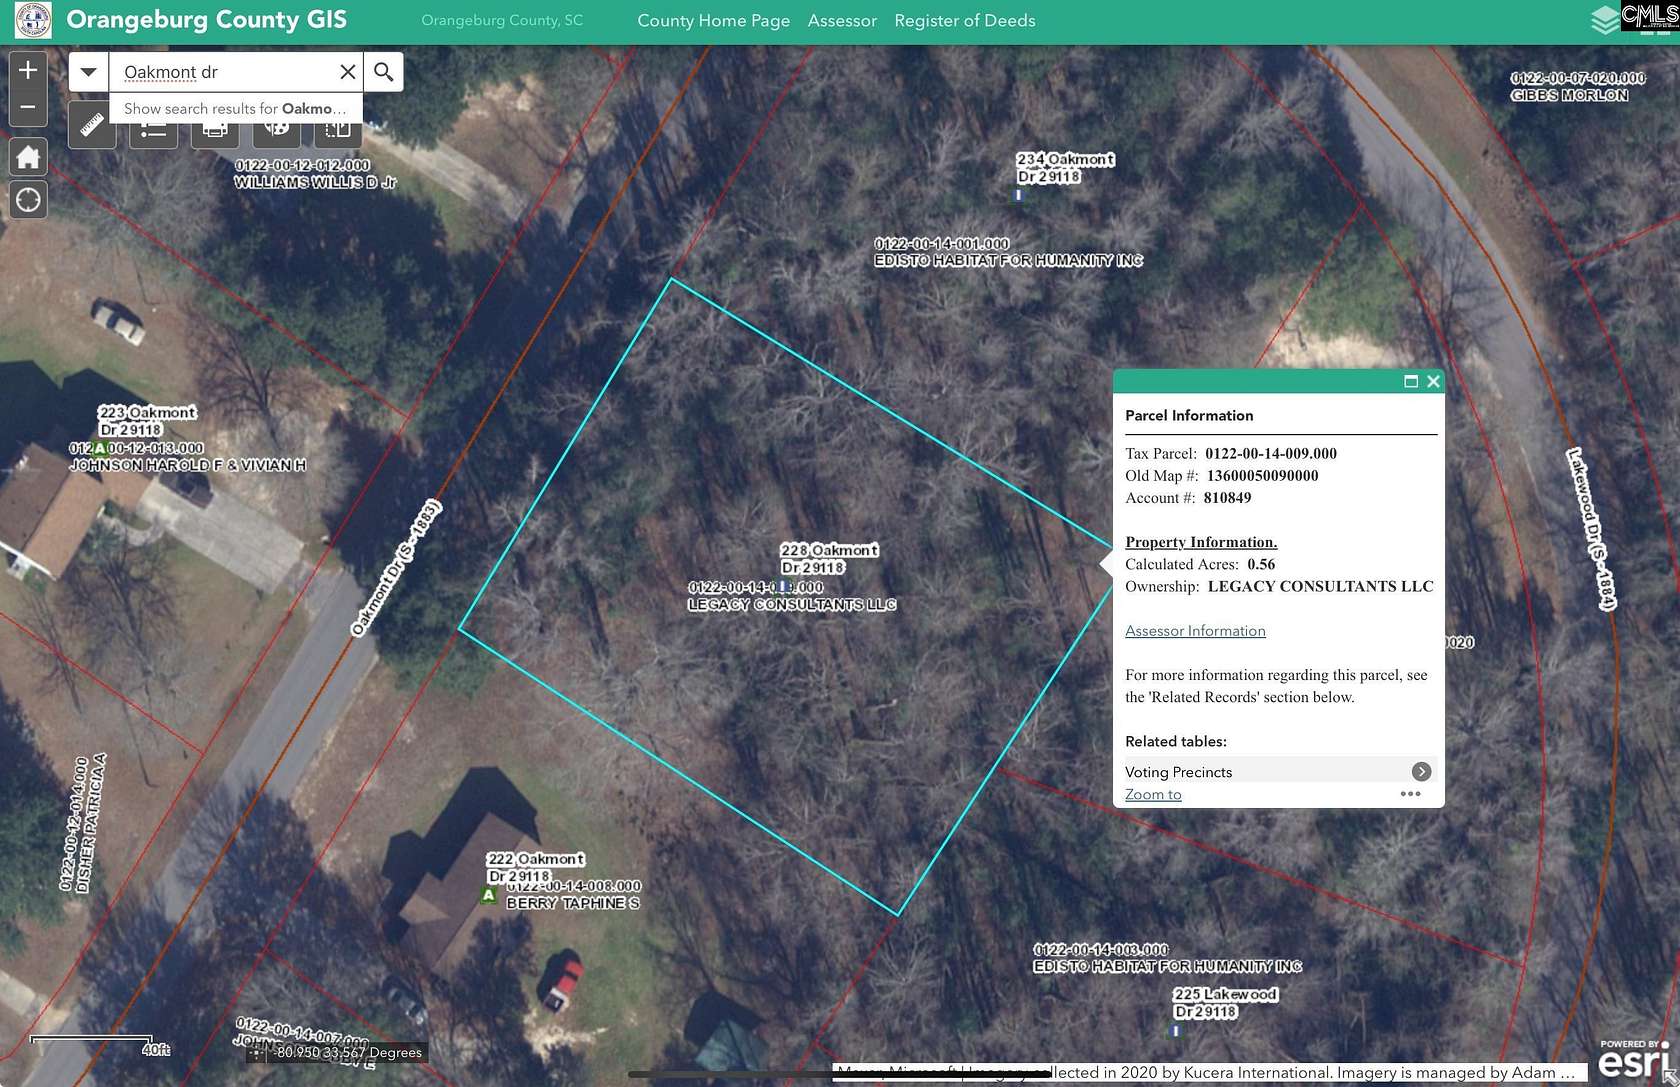 0.56 Acres of Land for Sale in Orangeburg, South Carolina